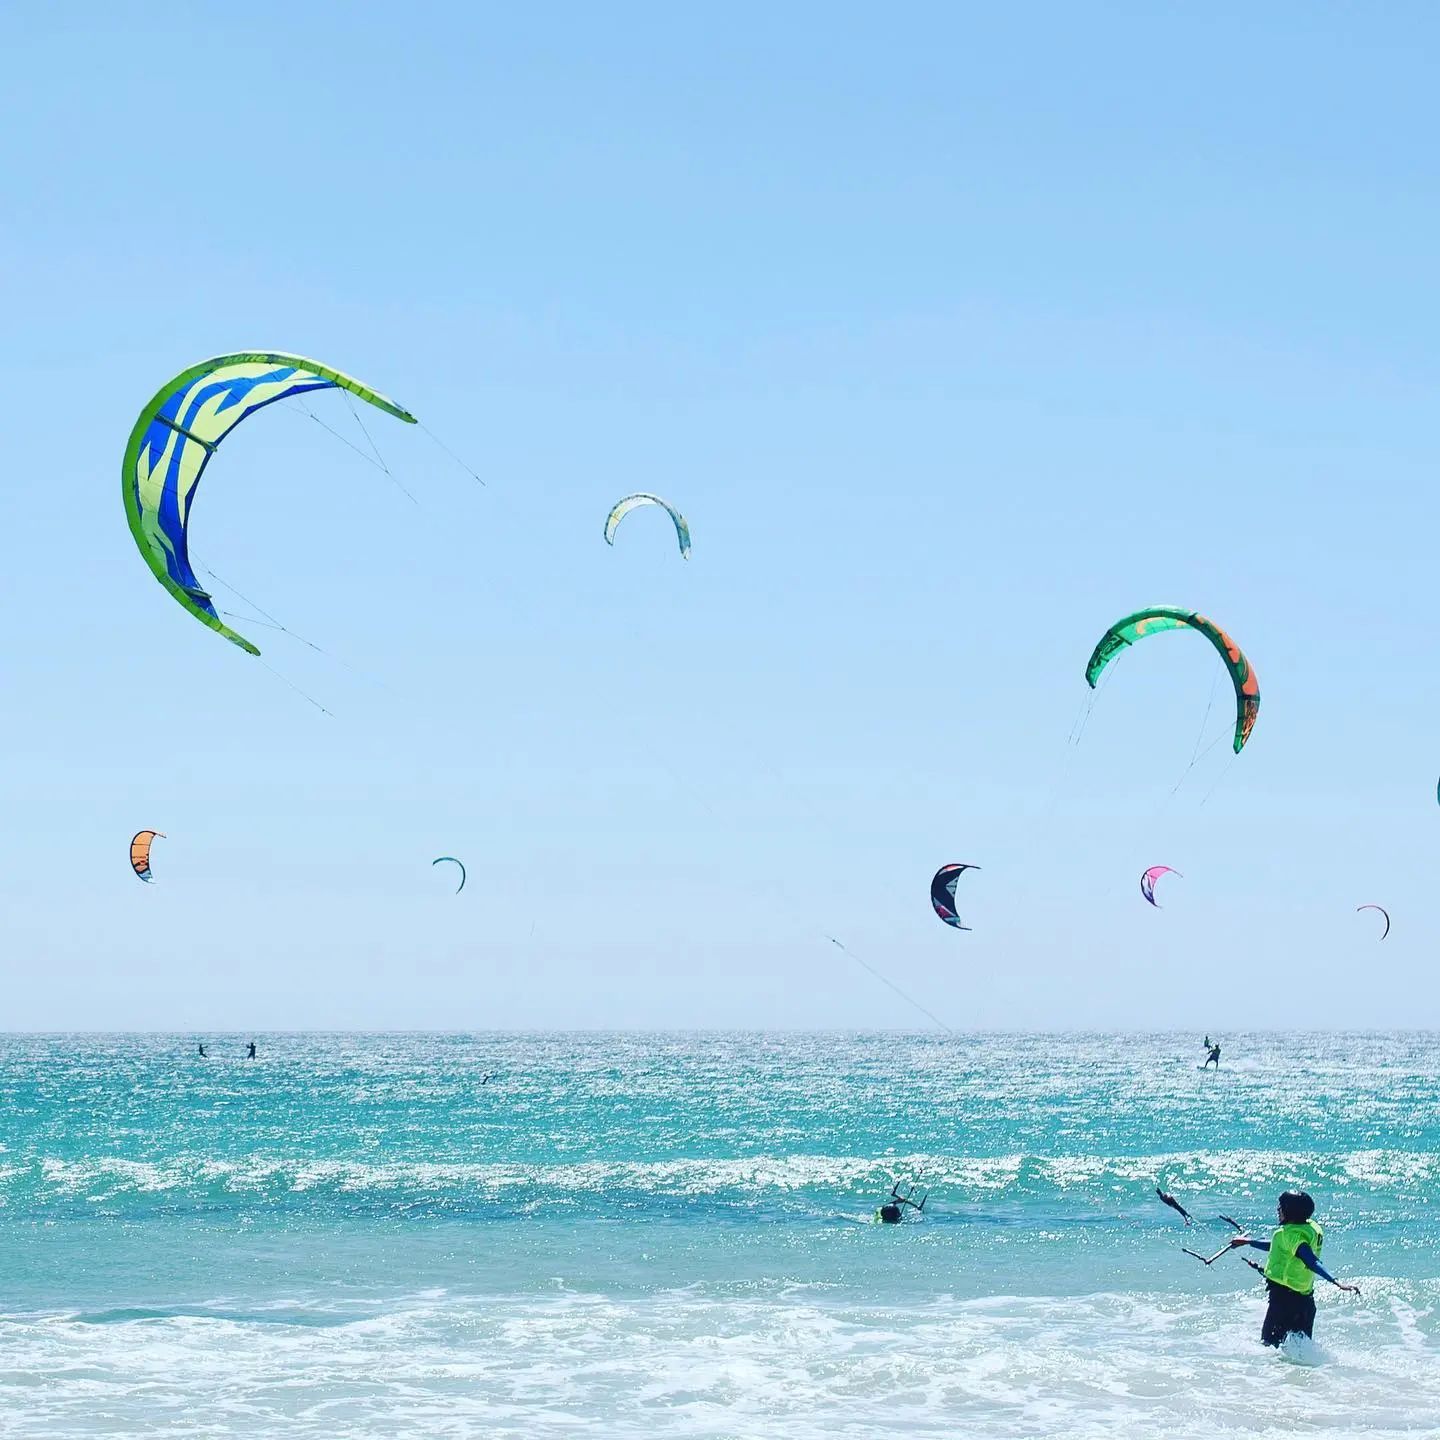 Happy start of the week !! @kiteboardingclubtarifa #tarifa #kiteboarding #kitesurfing #spain🇪🇸 #beach #sea #waves #energy #watersports